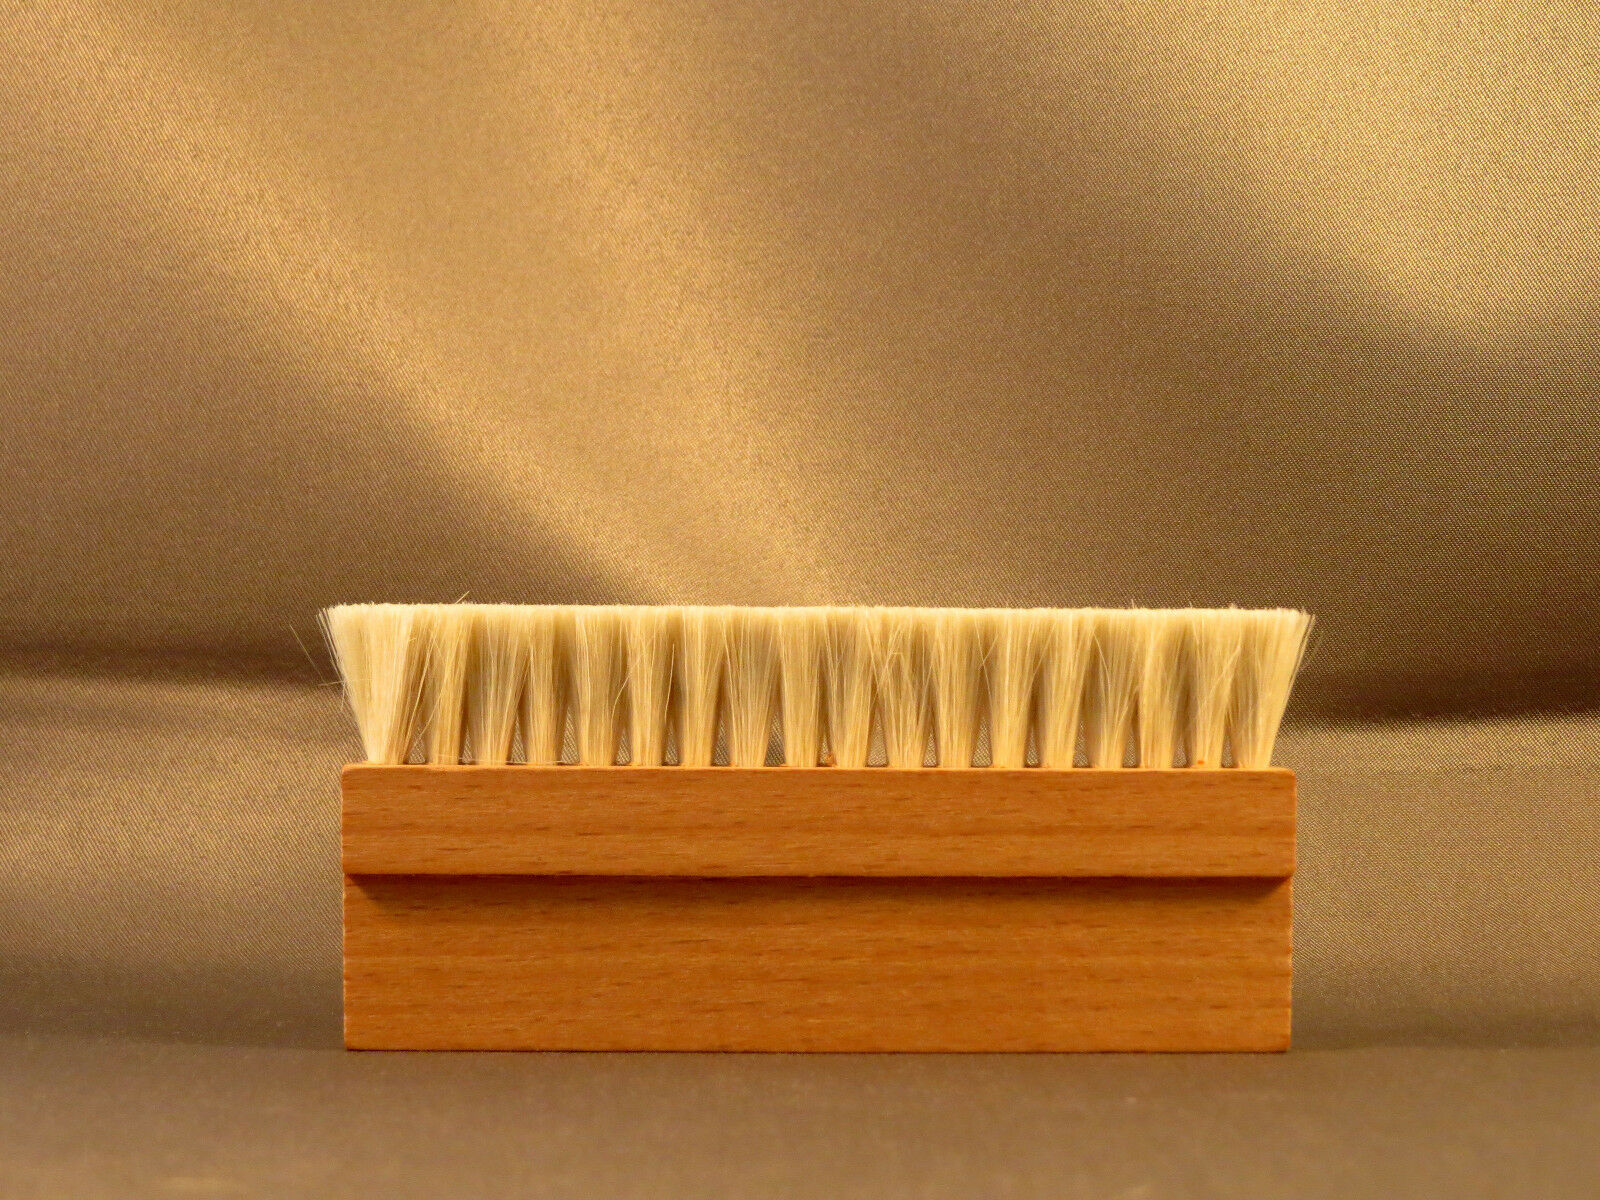 Wooden Anti Static Goat Goat's Hair Record Brush Deep Cleaner Clean Vinyl